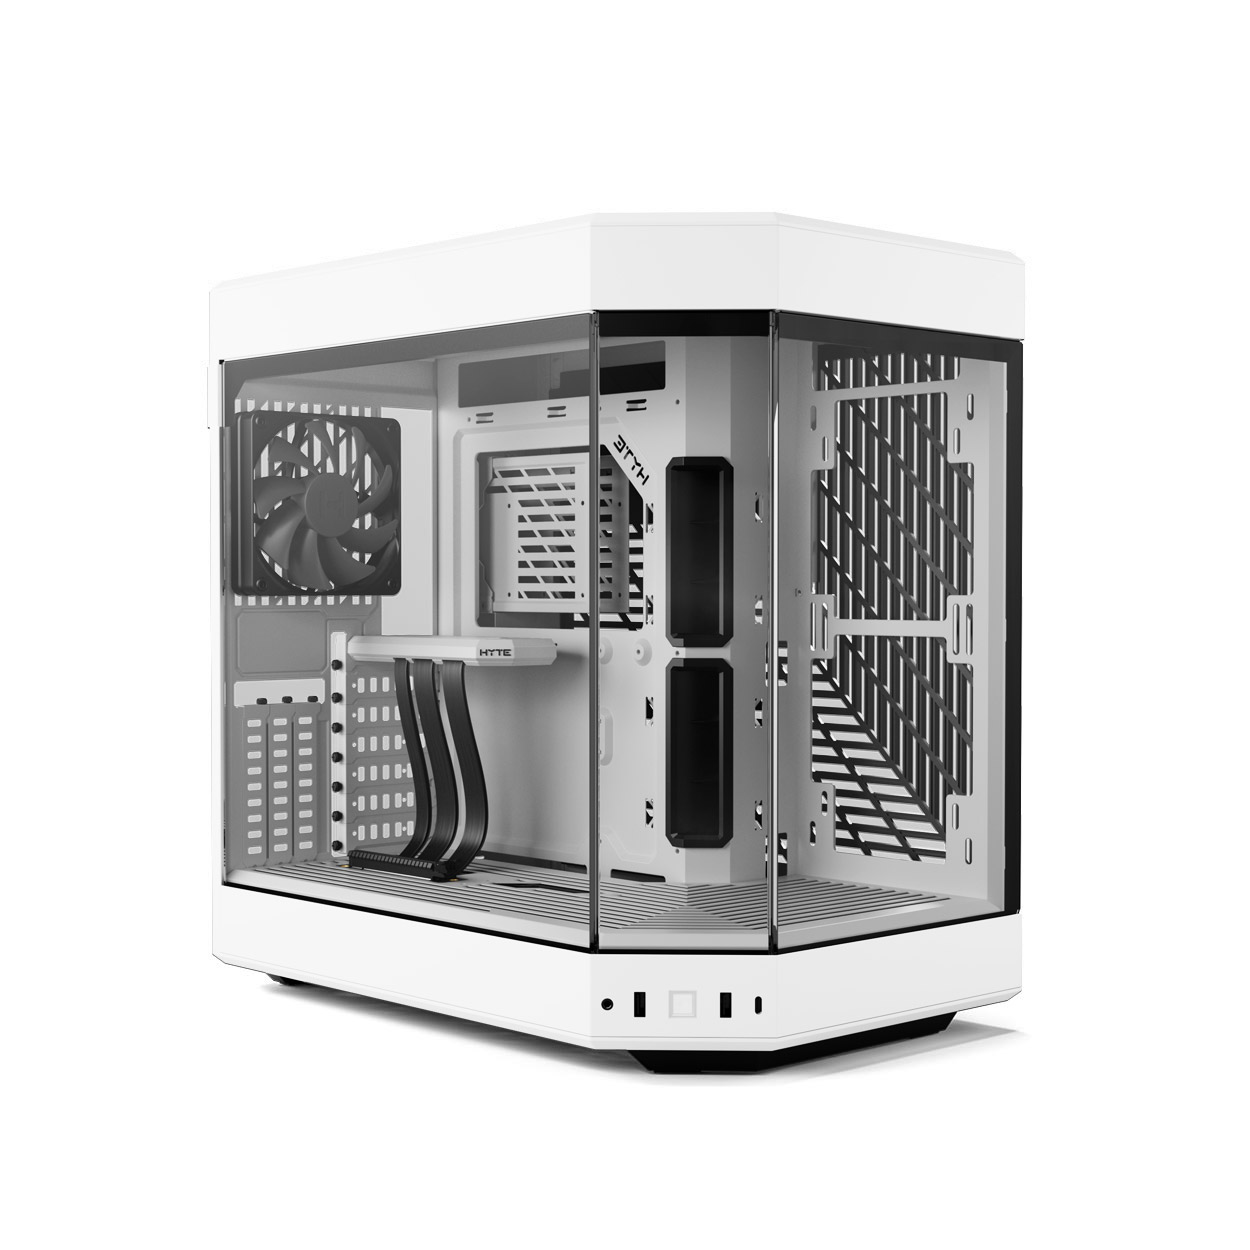 Full Tower PC Cases